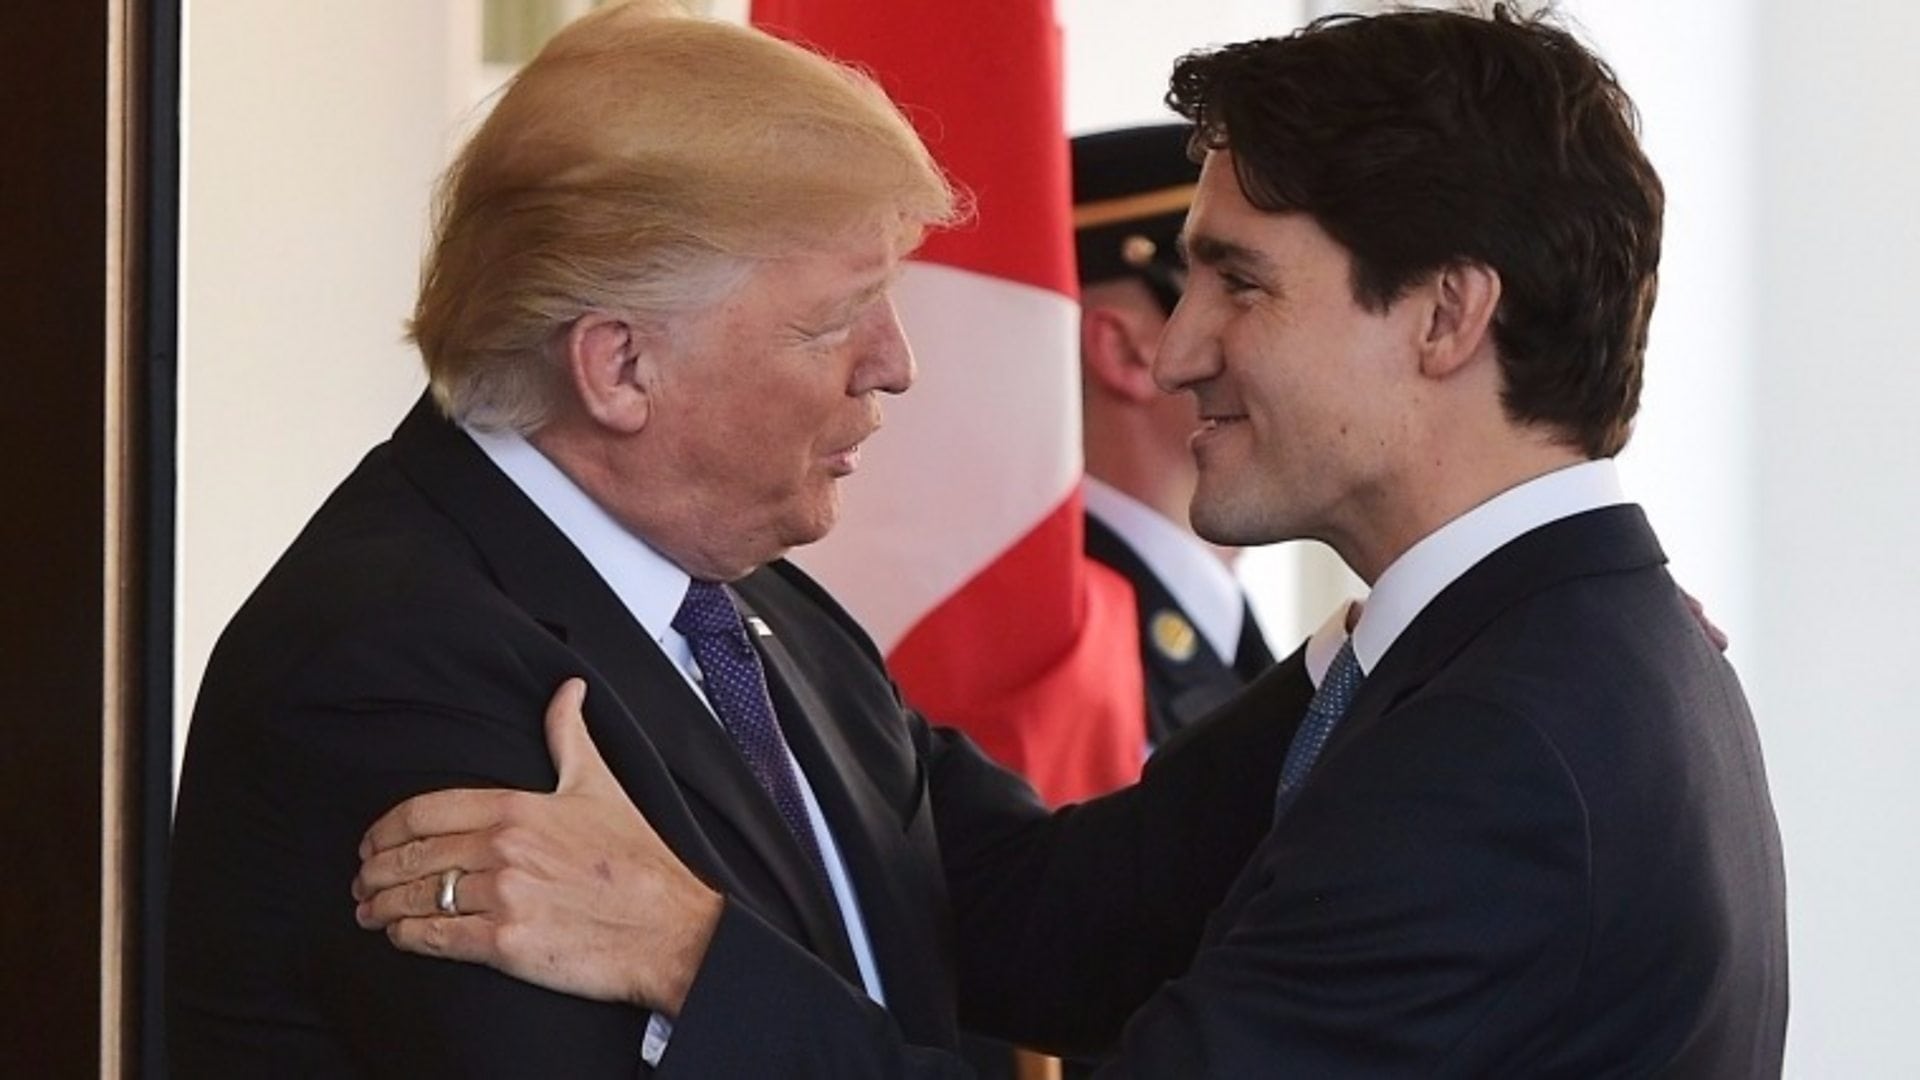 Trump and Trudeau together (Credits: BBC)